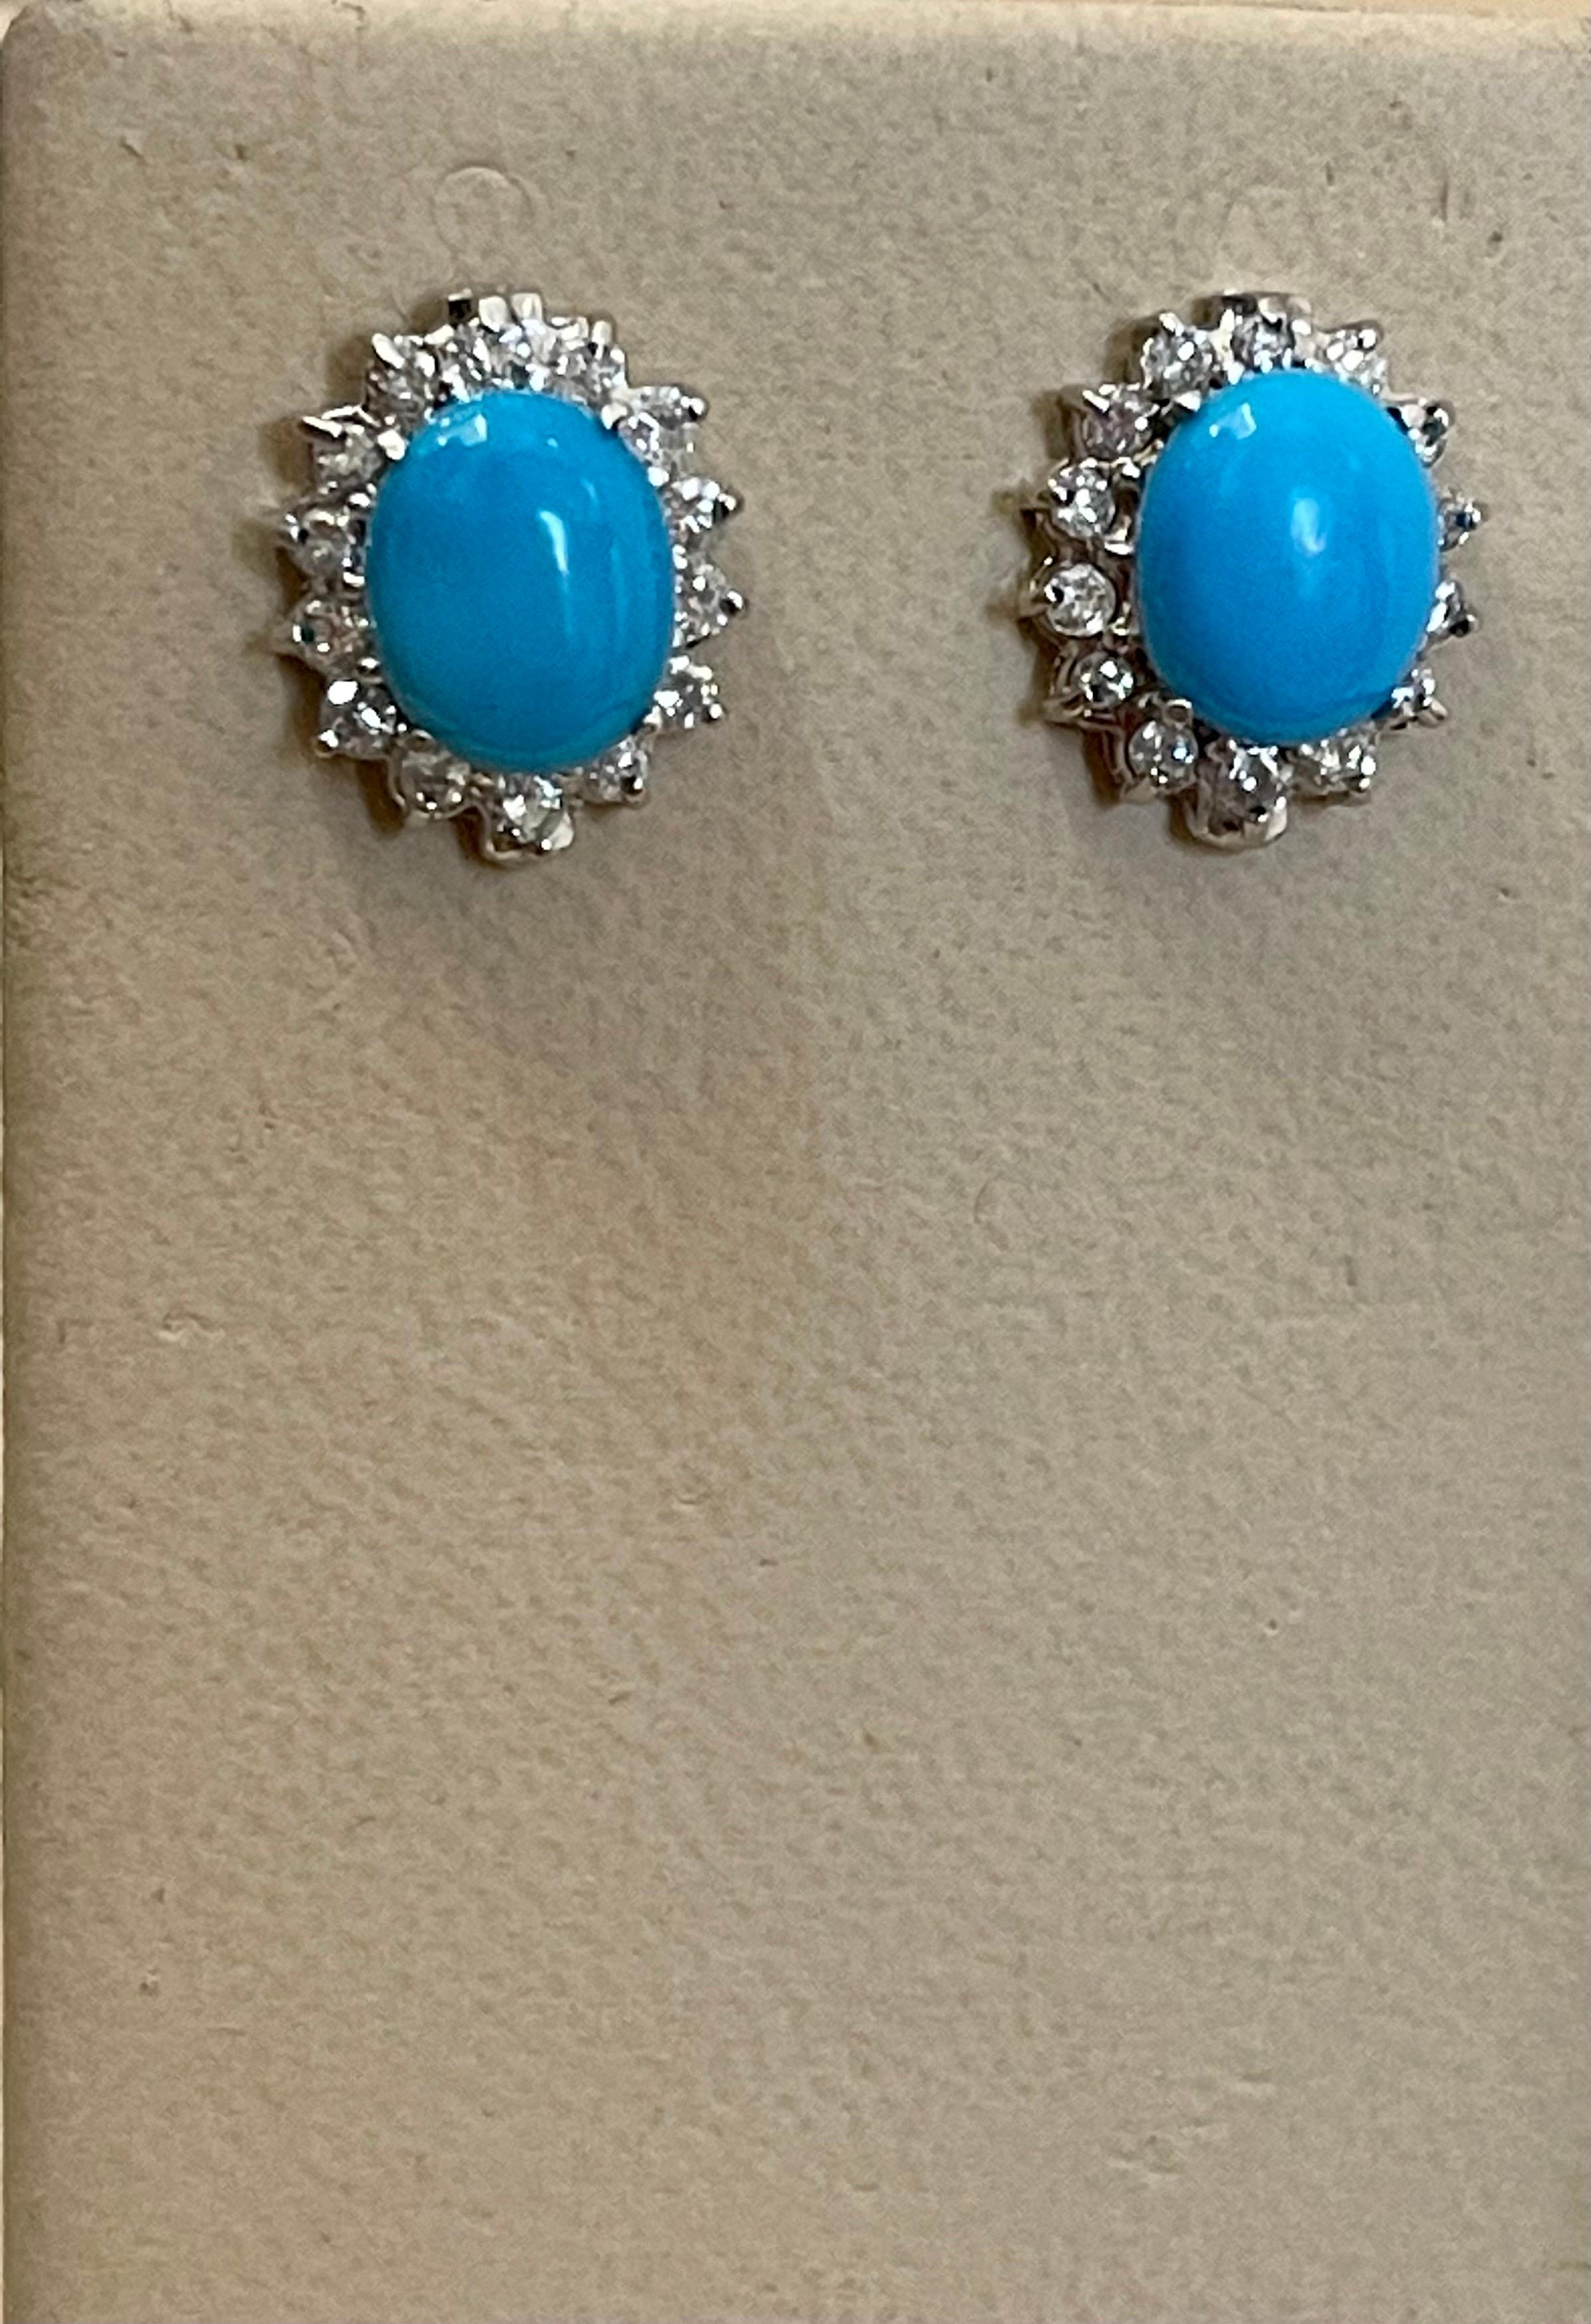 8 Ct Oval Sleeping Beauty Turquoise & 1 Ct Diamond Stud Earrings 14 K White Gold 3